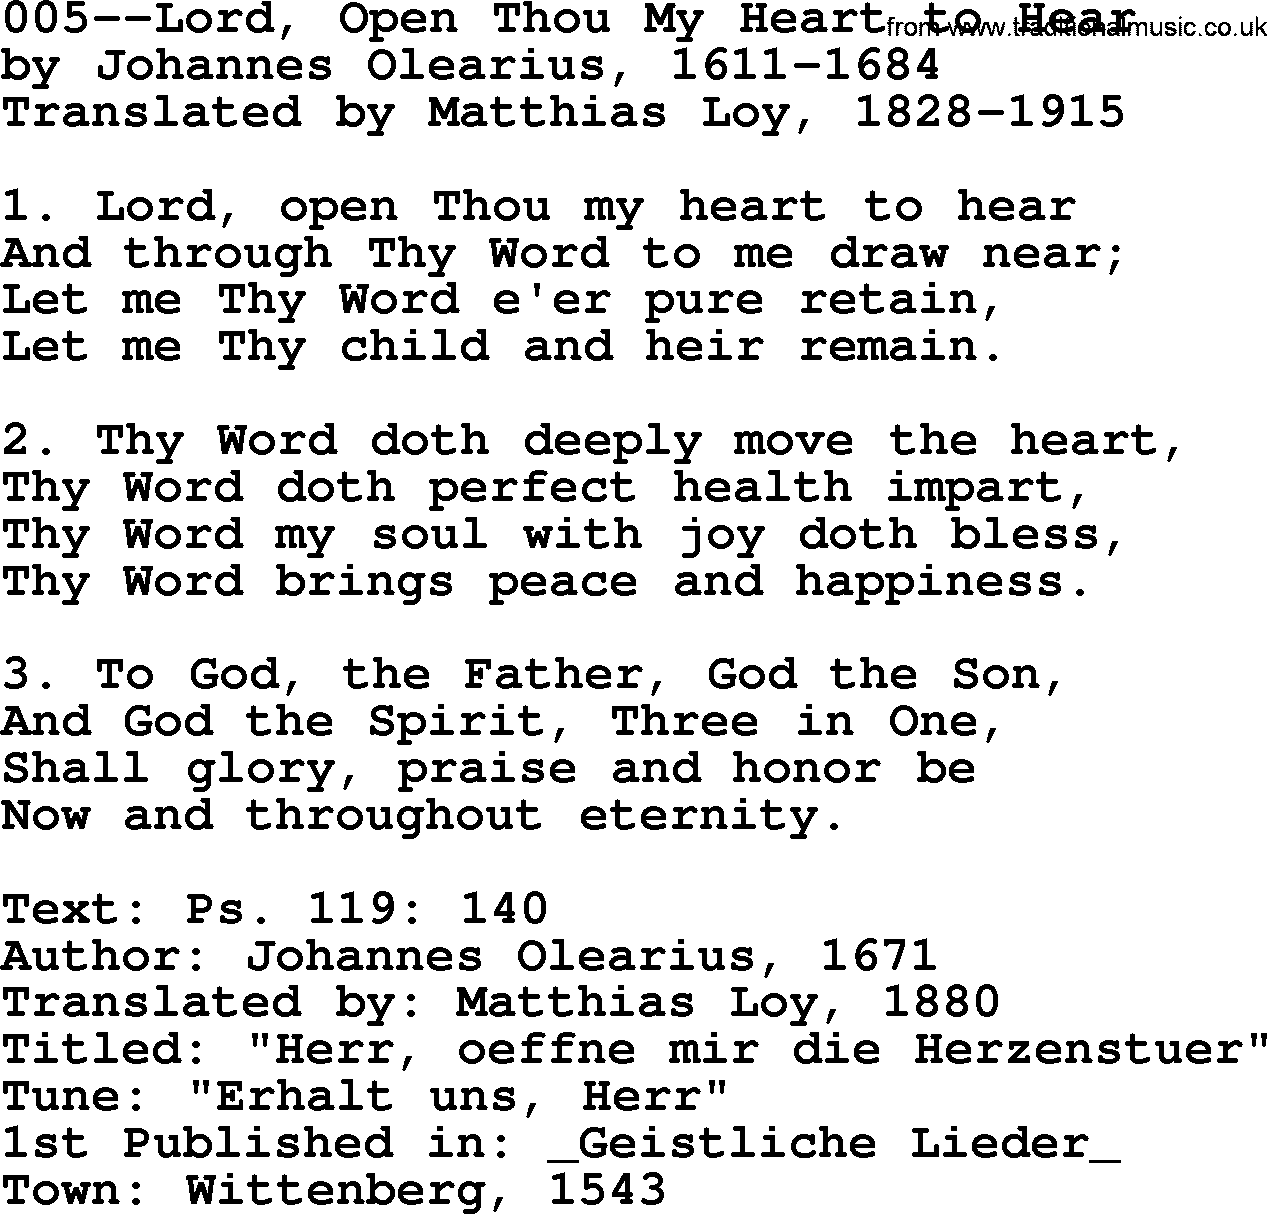 Lutheran Hymn: 005--Lord, Open Thou My Heart to Hear.txt lyrics with PDF